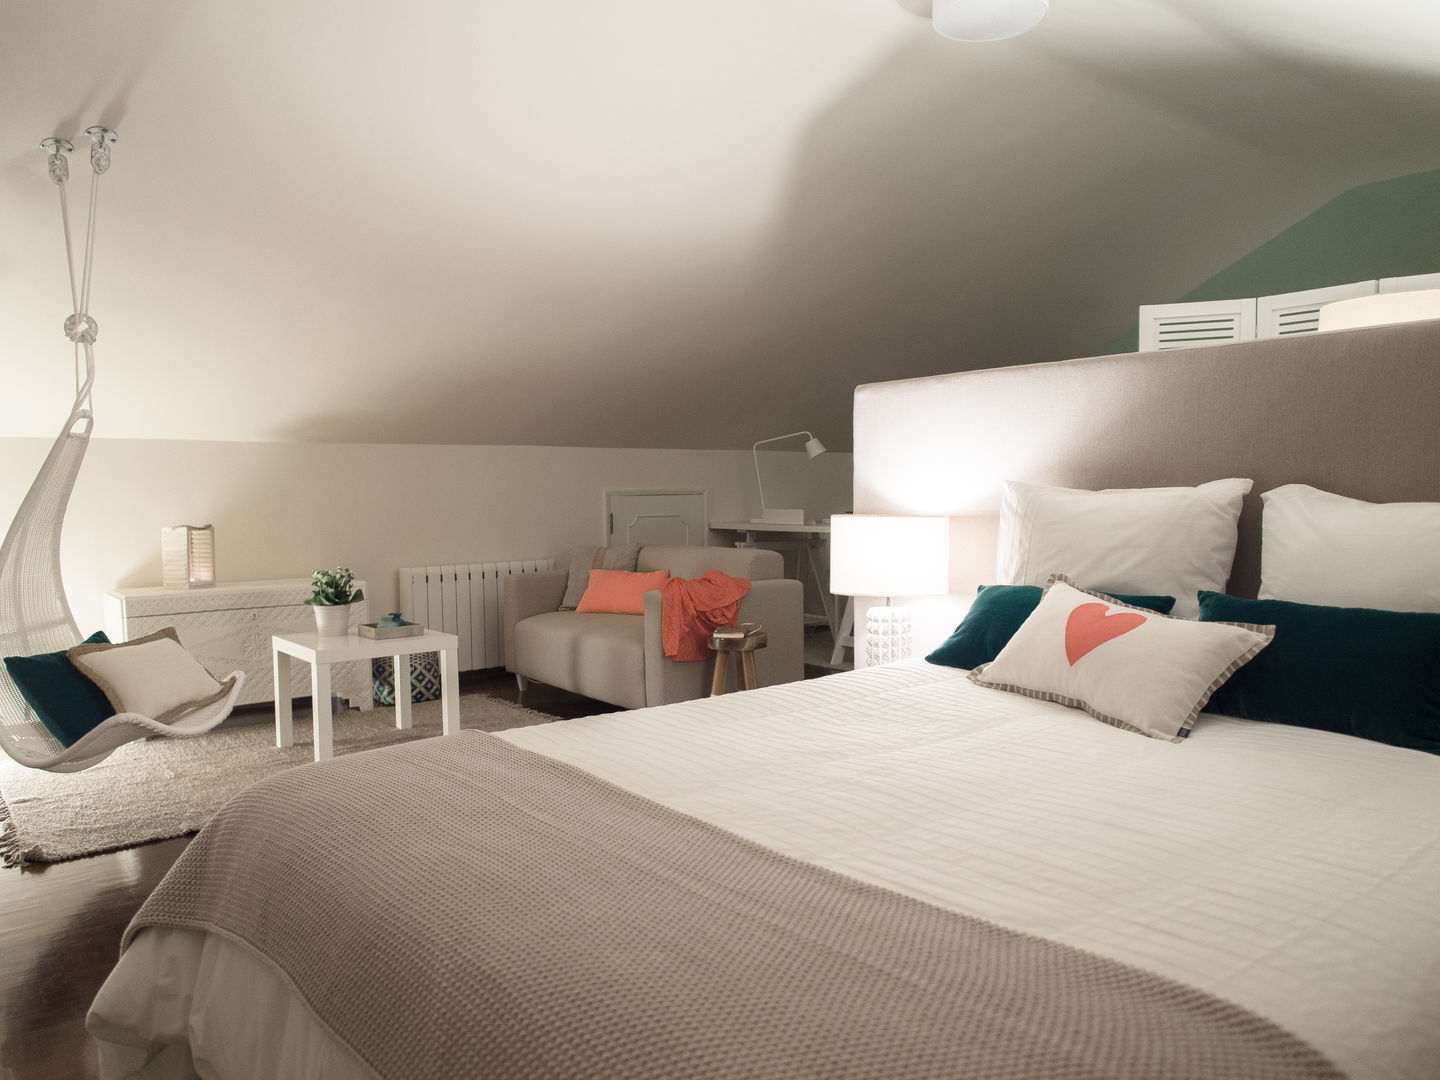 DP Bedroom - Sintra, MUDA Home Design MUDA Home Design غرفة نوم